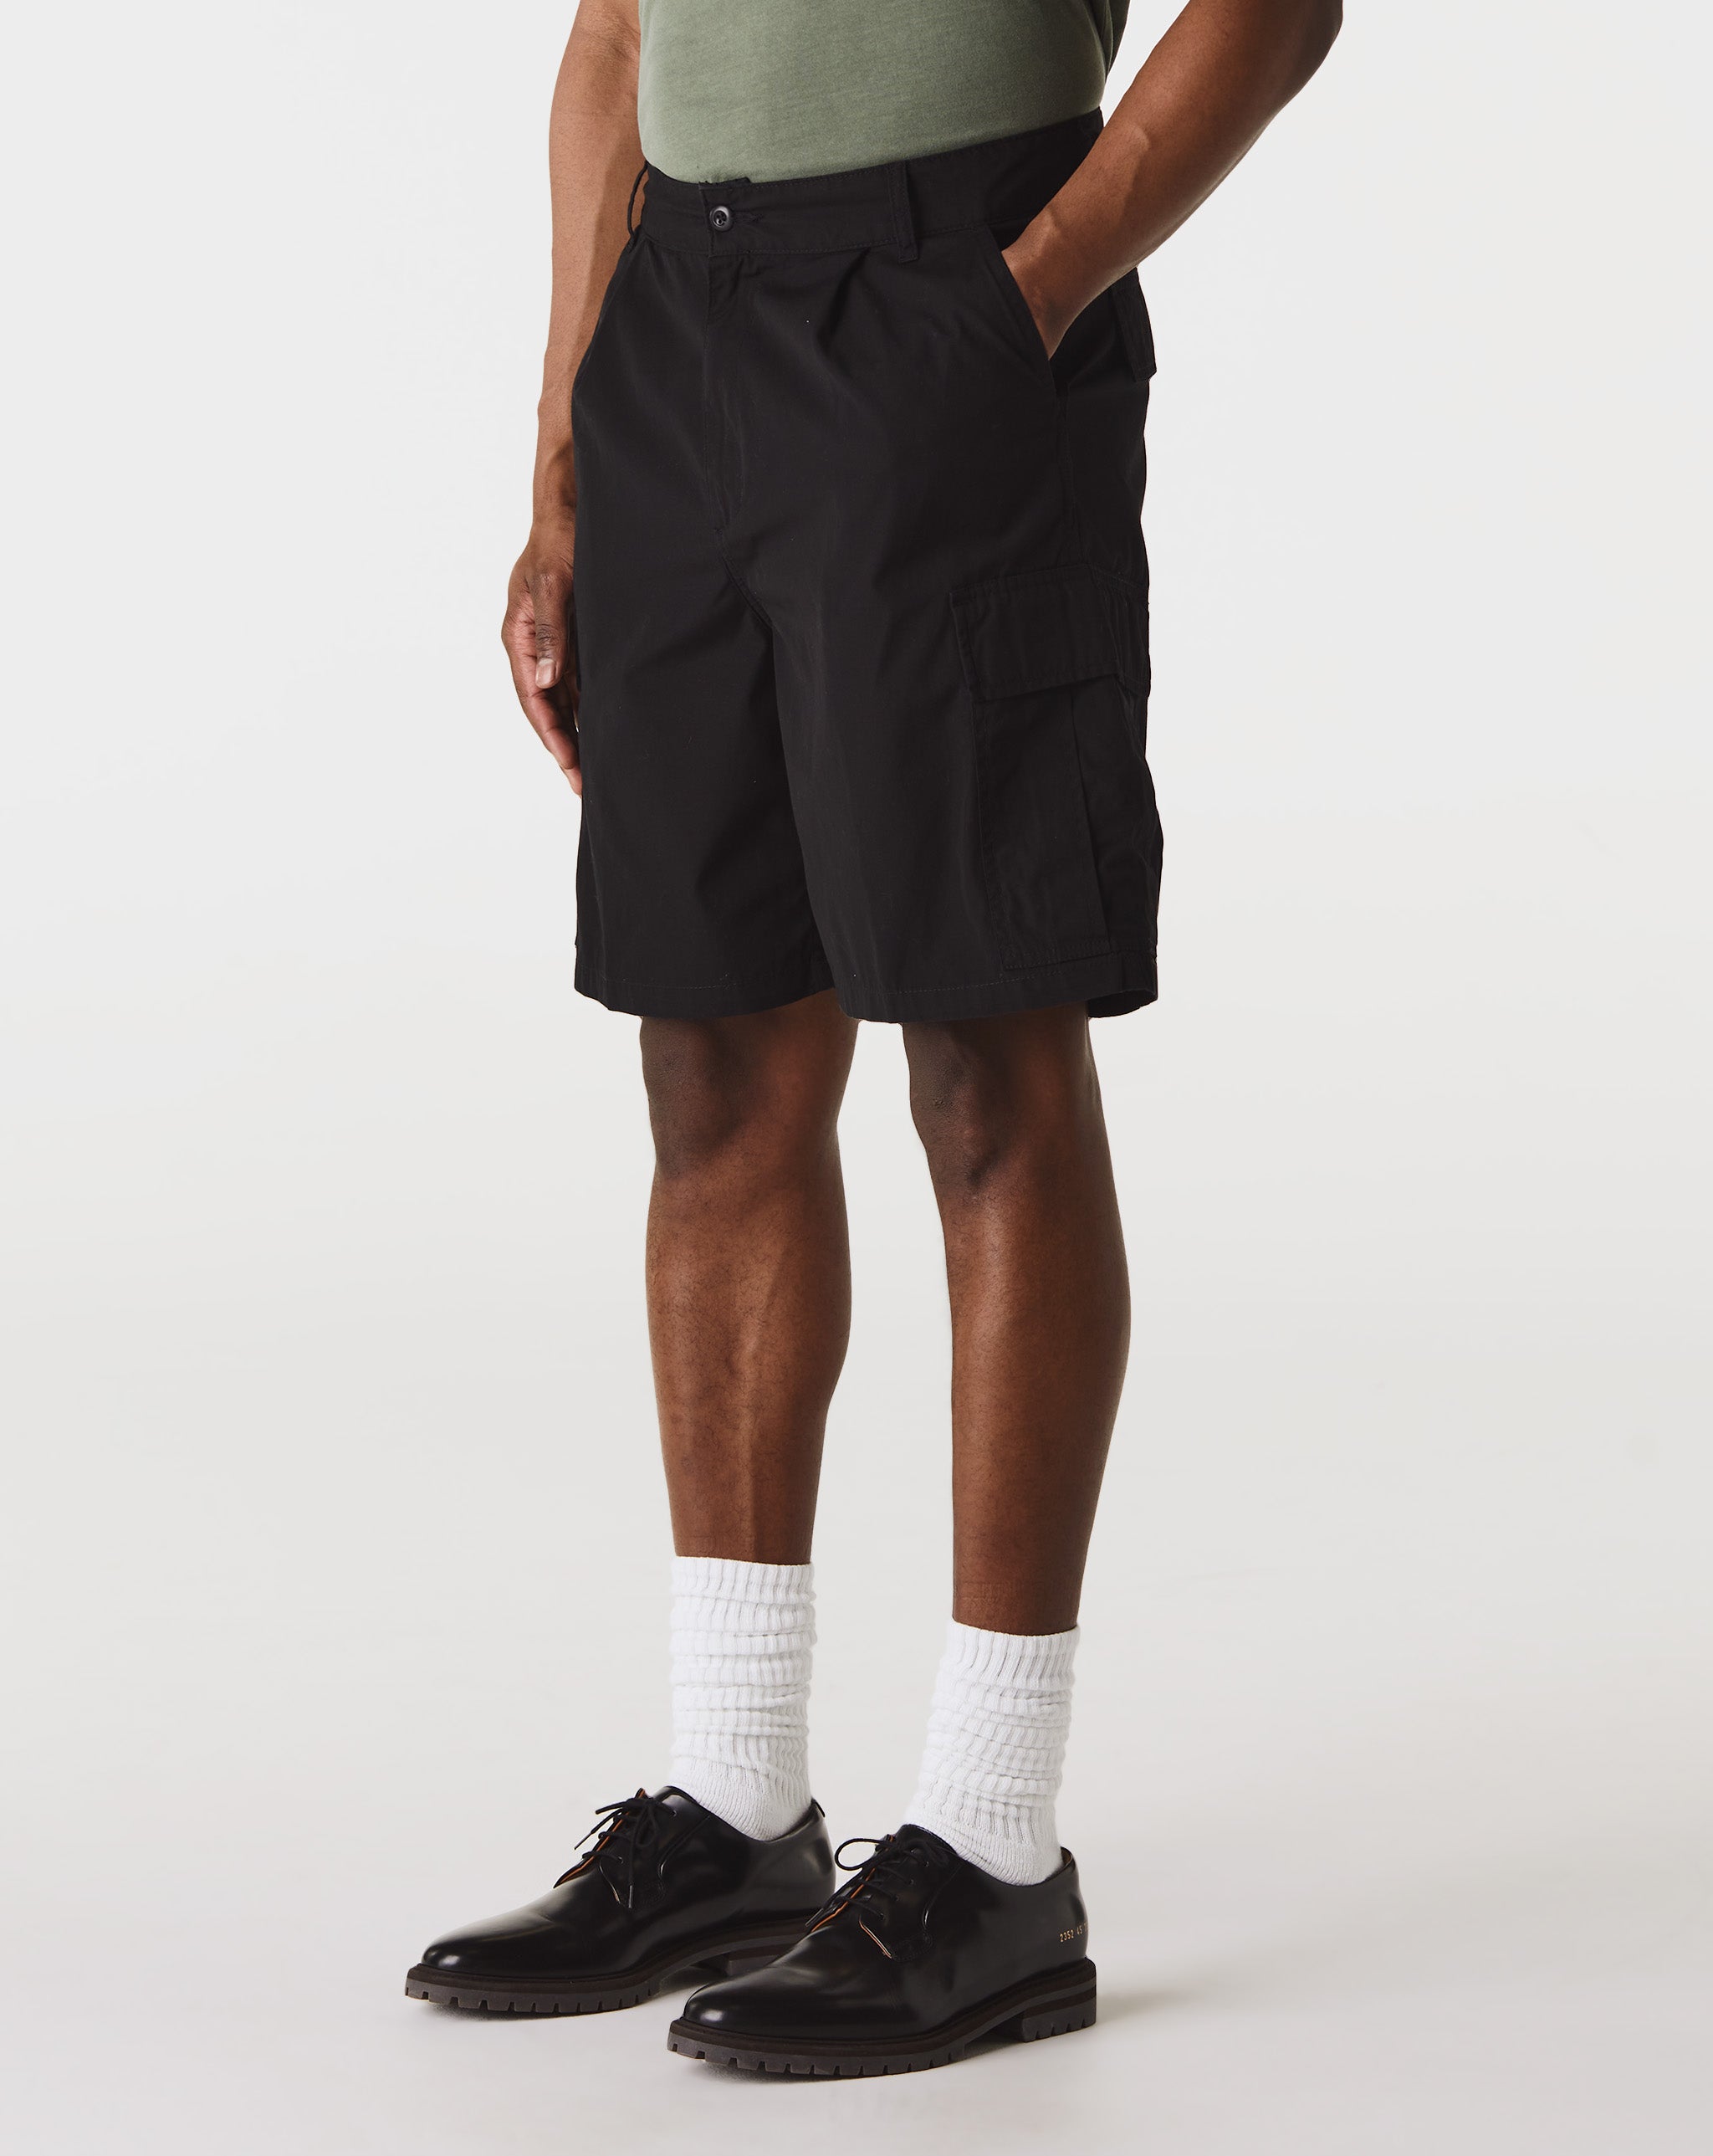 Carhartt WIP Fendi Track & Running shorts pris for Men  - Cheap Urlfreeze Jordan outlet